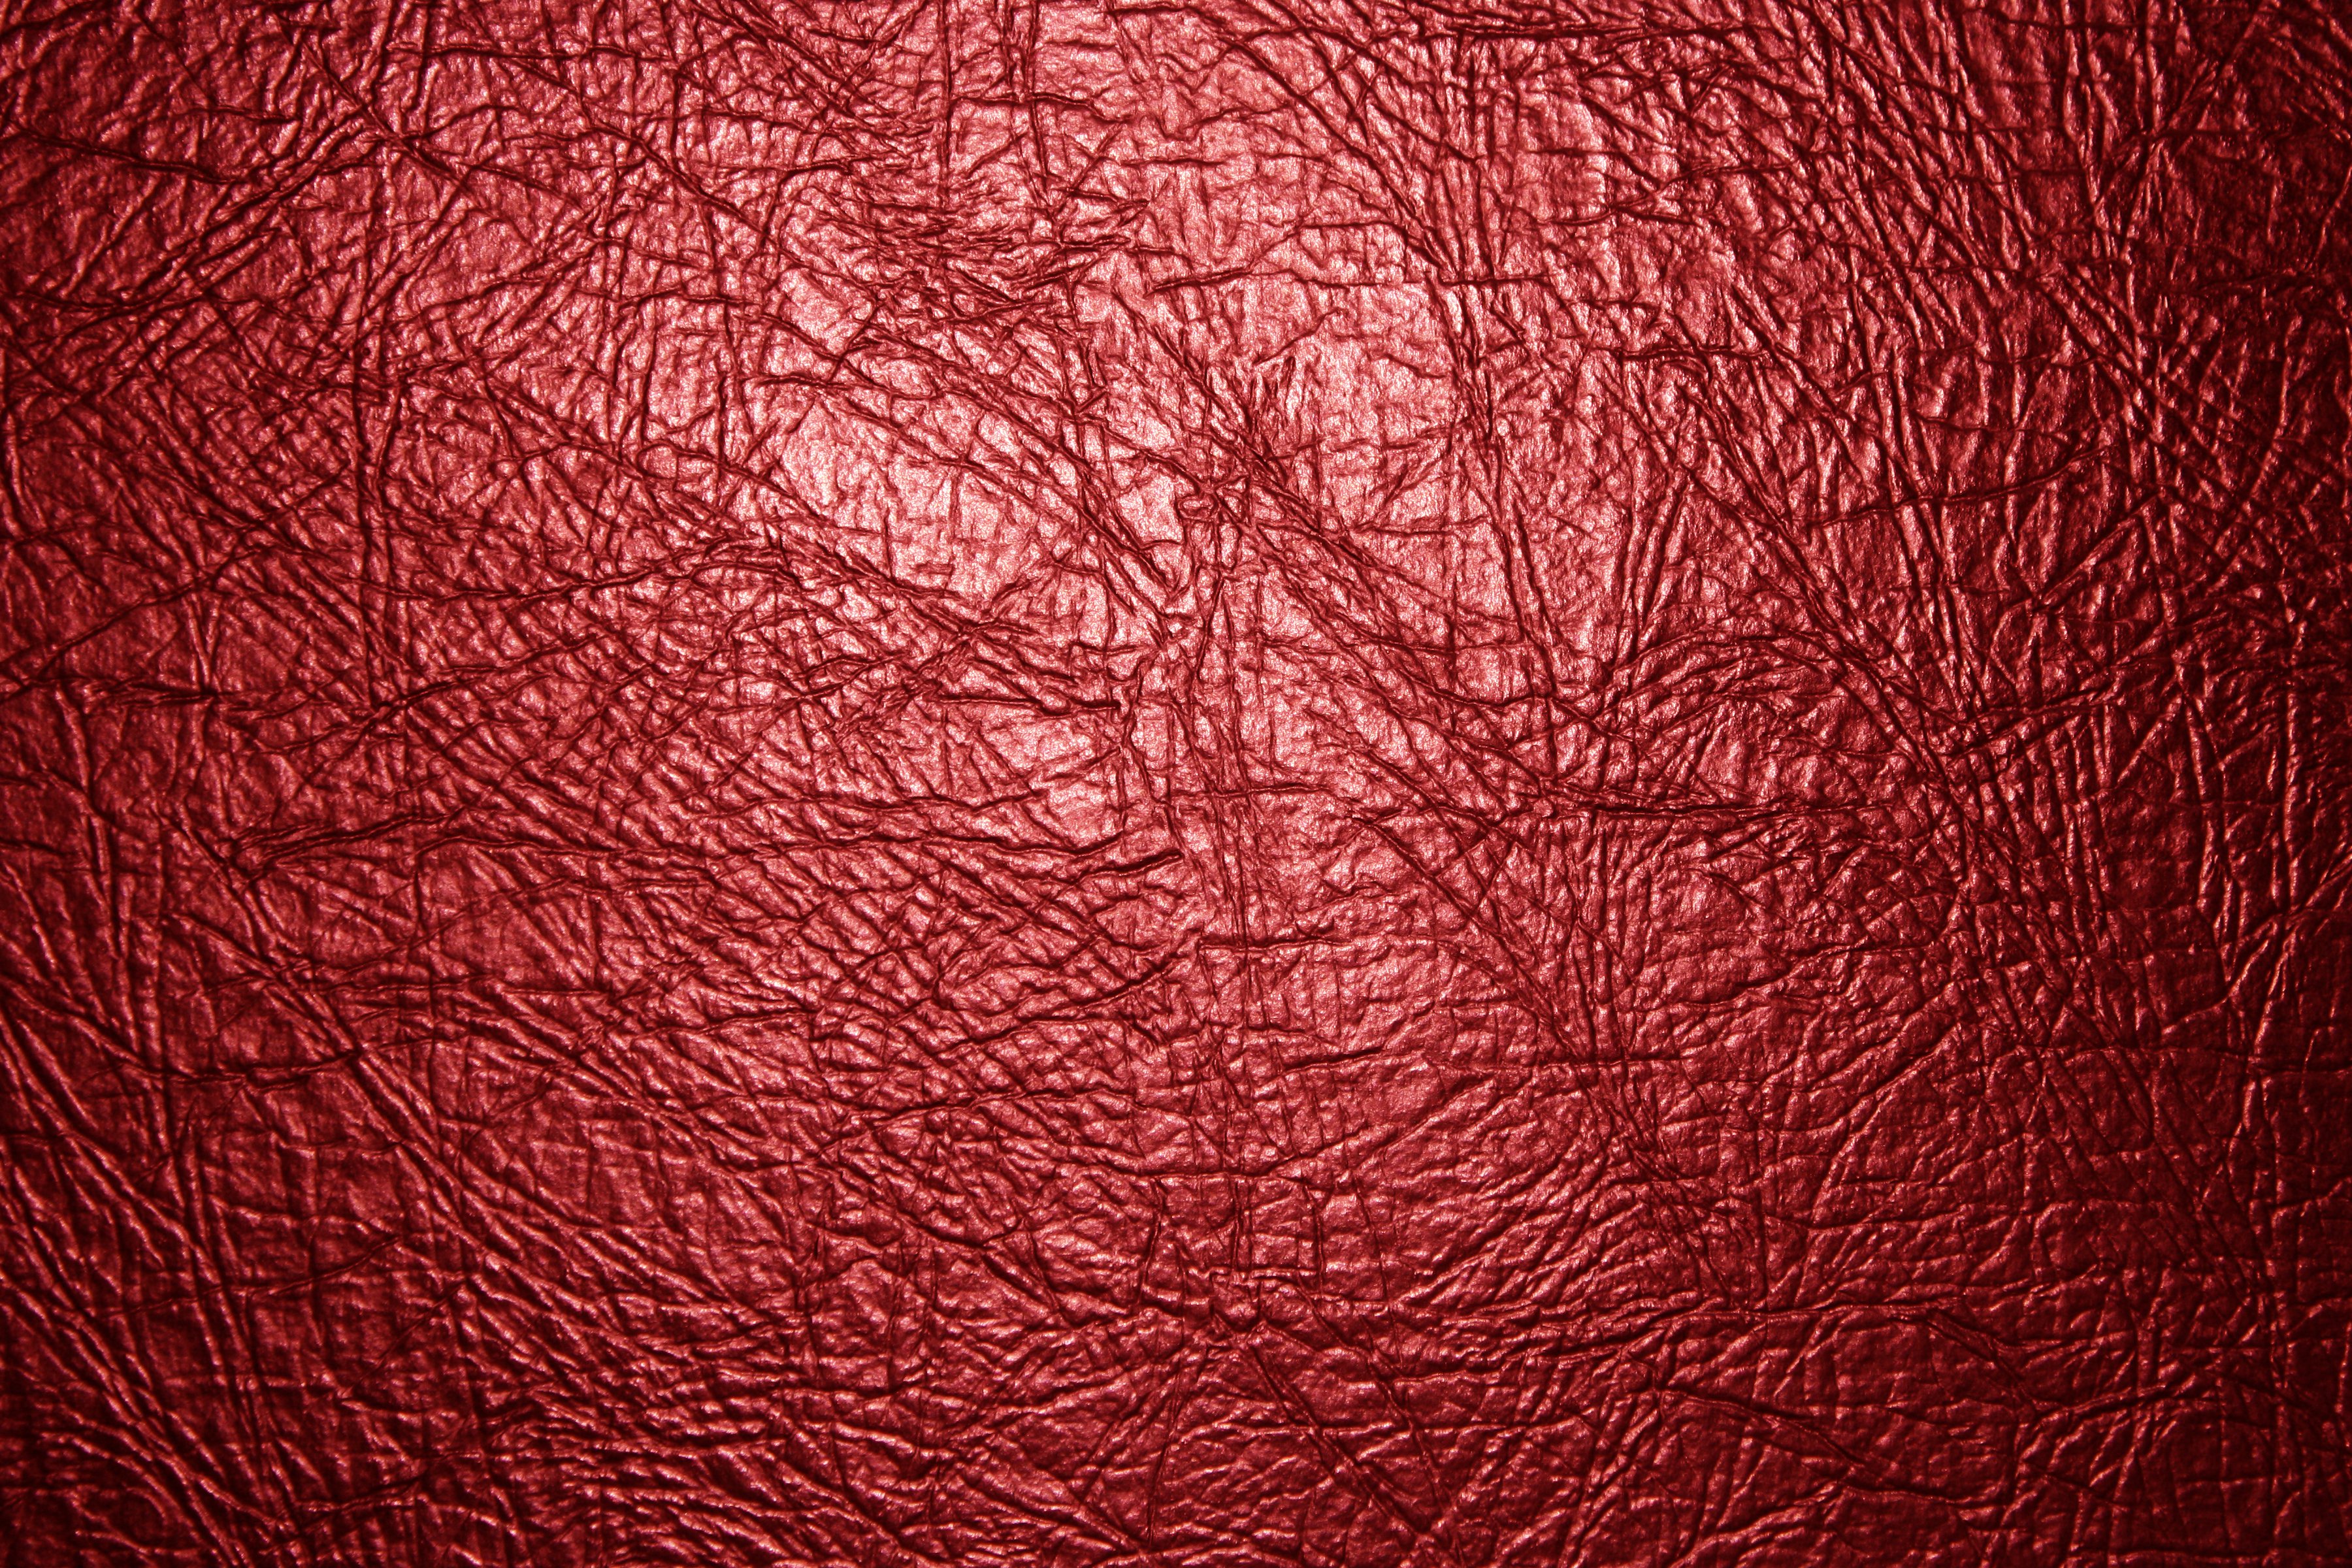 https://www.photos-public-domain.com/wp-content/uploads/2012/01/red-leather-texture-close-up.jpg